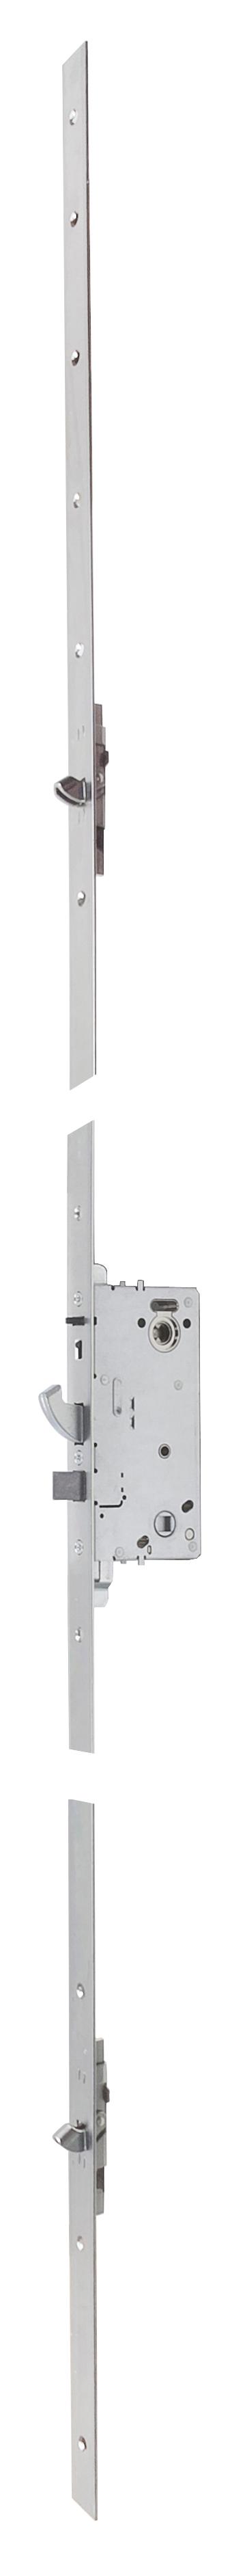 Ruko YD 3-point locking box - 2331mm H, D 50mm, 25mm post